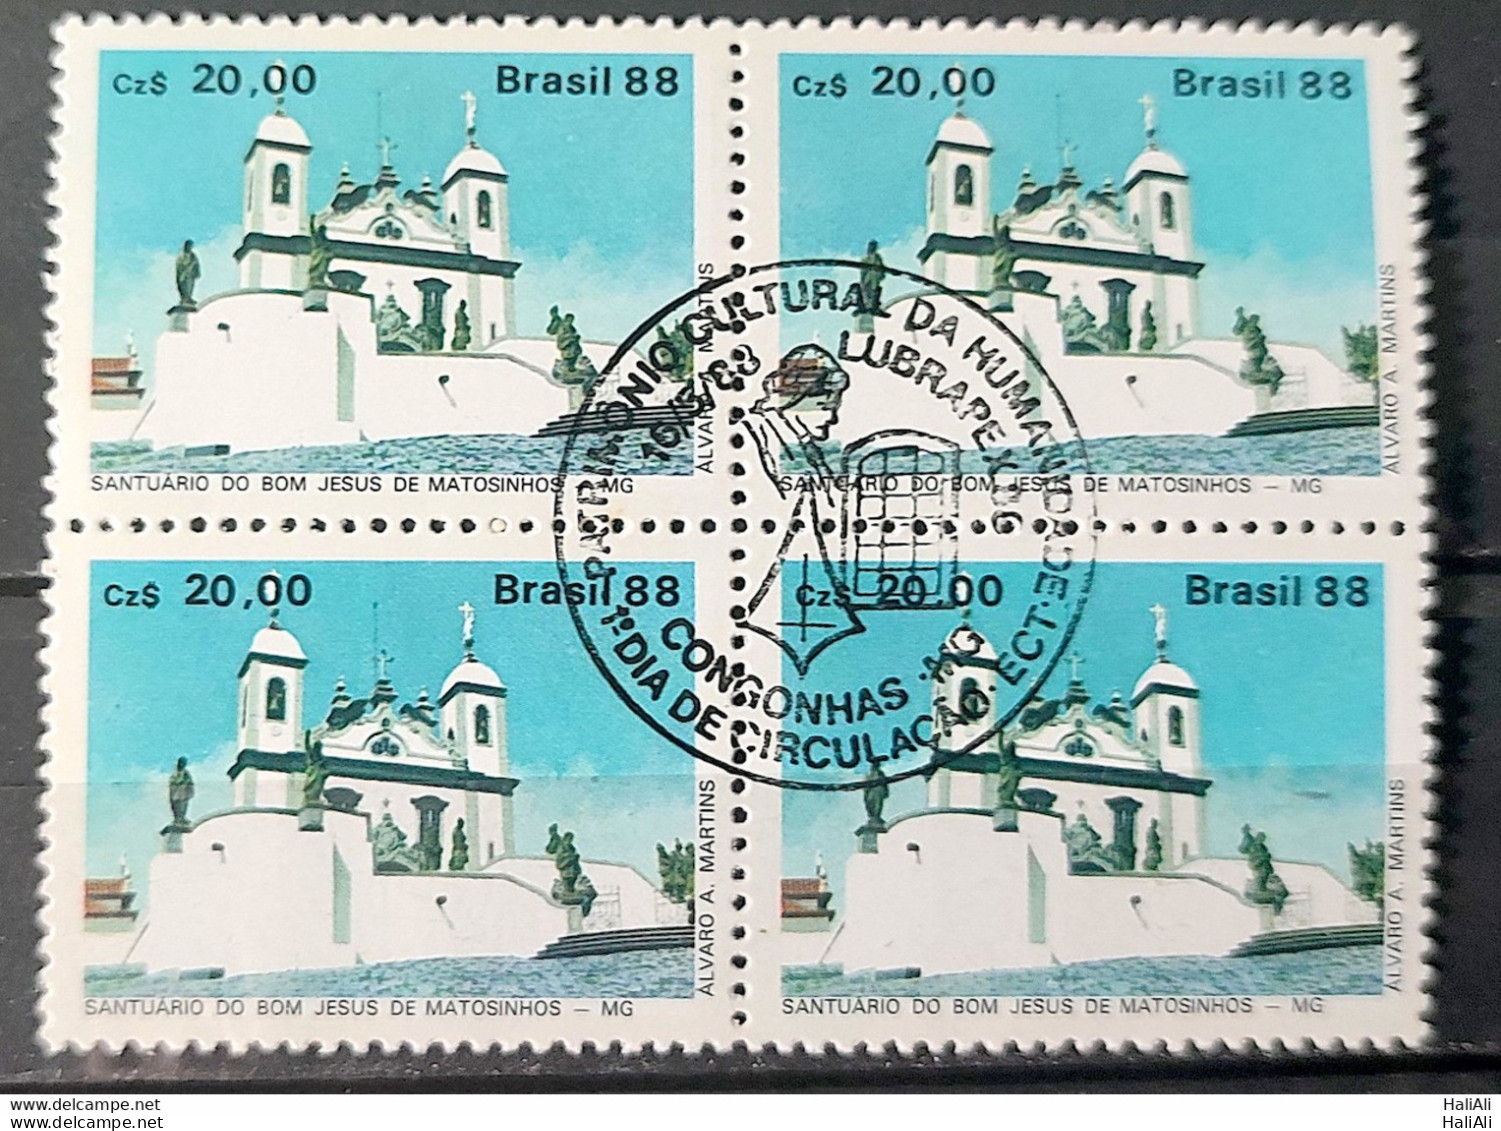 C 1585 Brazil Stamp Lubrapex Portugal Bom Jesus De Matosinhos 1988 Block Of 4 CBC MG - Nuevos